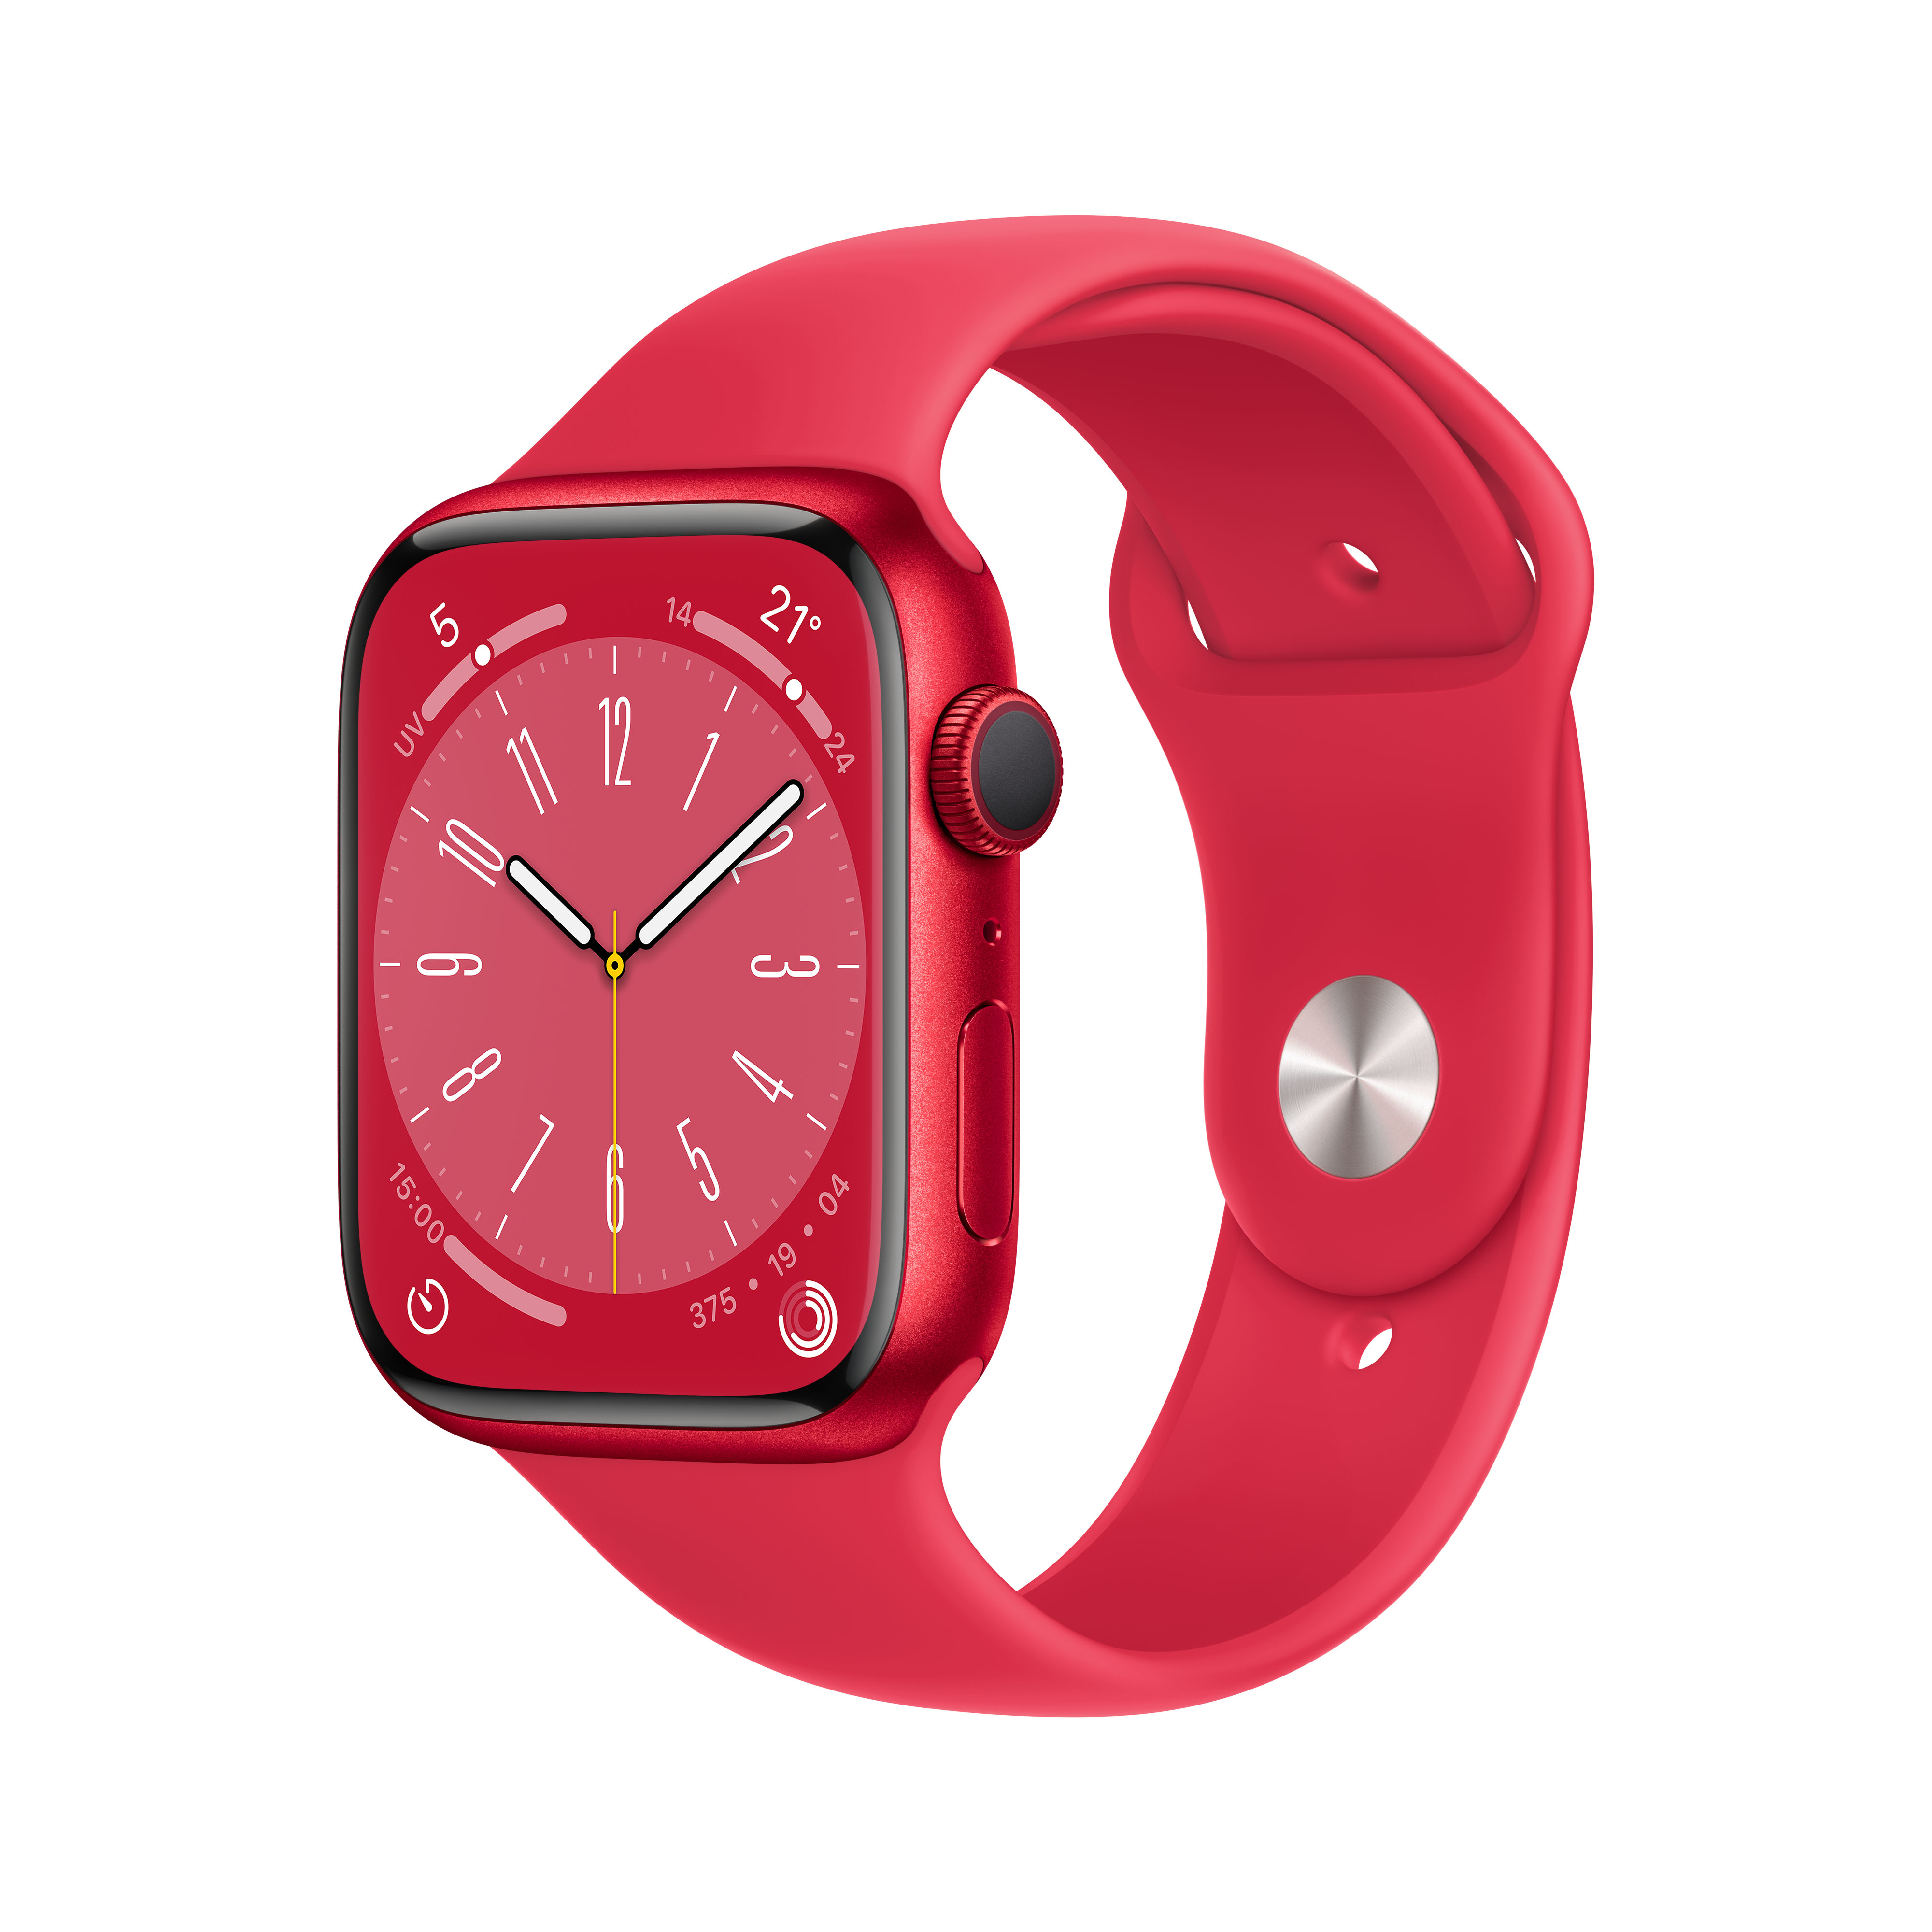 Apple Watch Series 8 GPS 41mm Cassa in Alluminio Red con Cinturino Sport Band Red - Regular